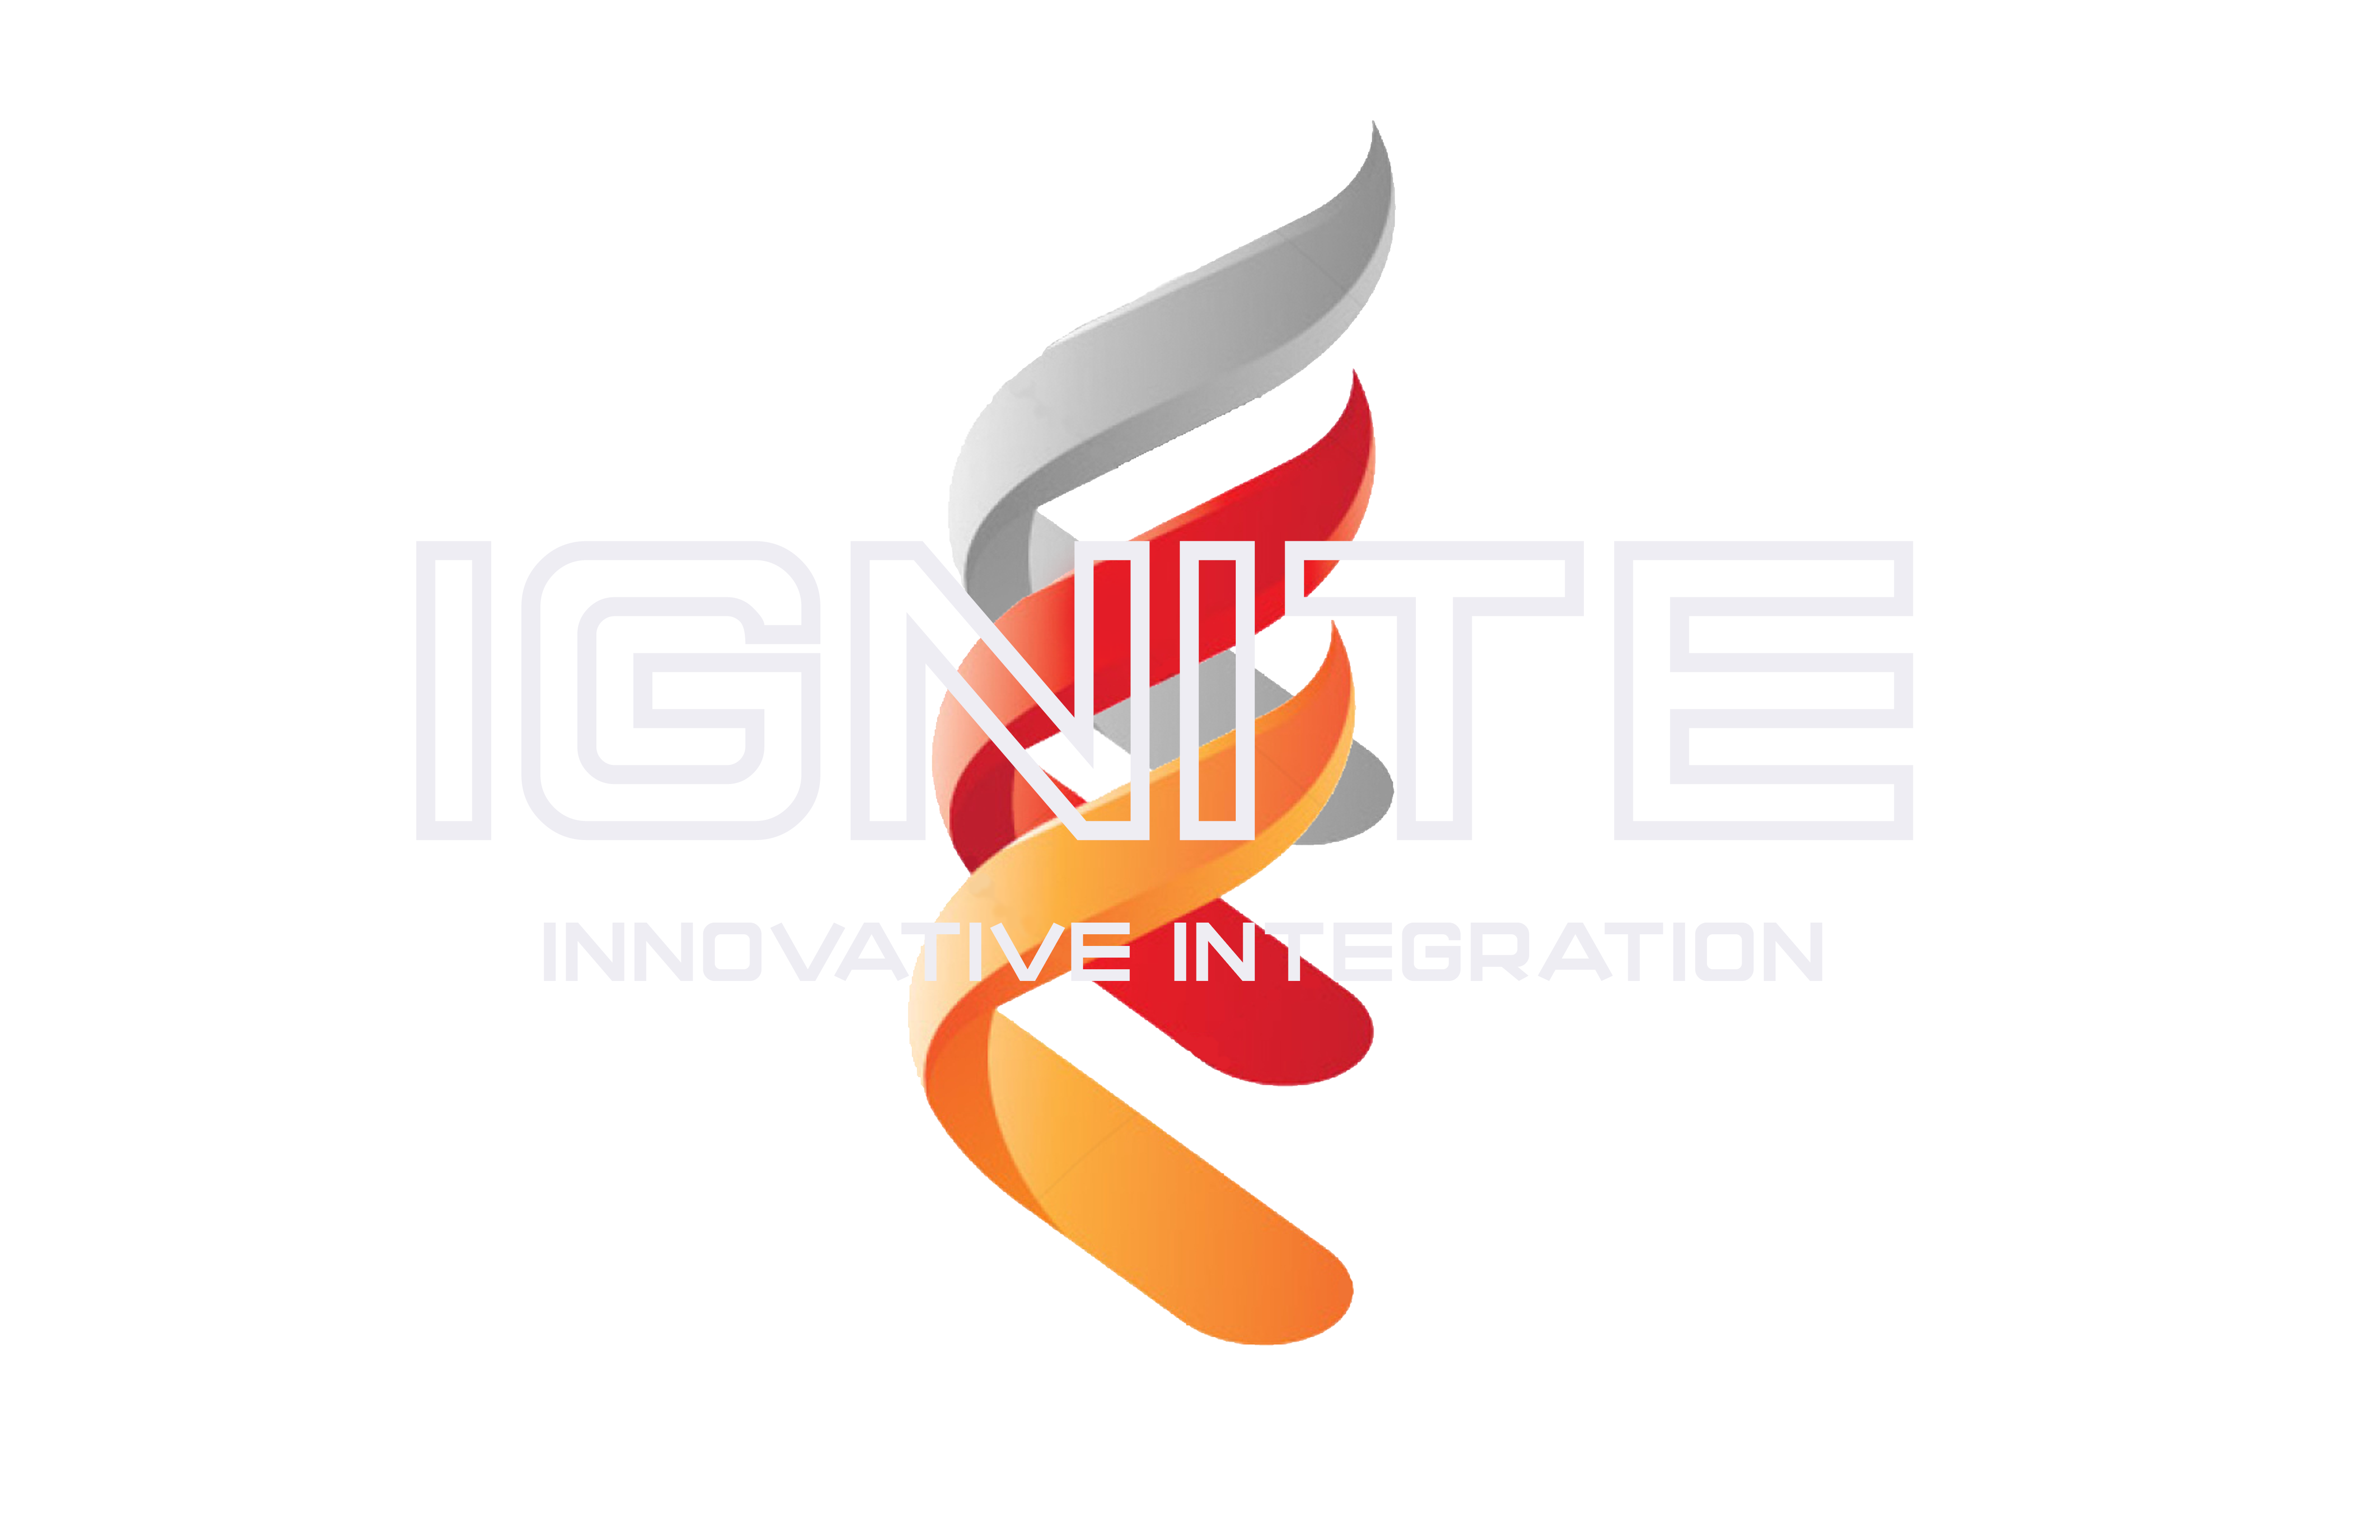 Ignite Innovation – Ignite Change